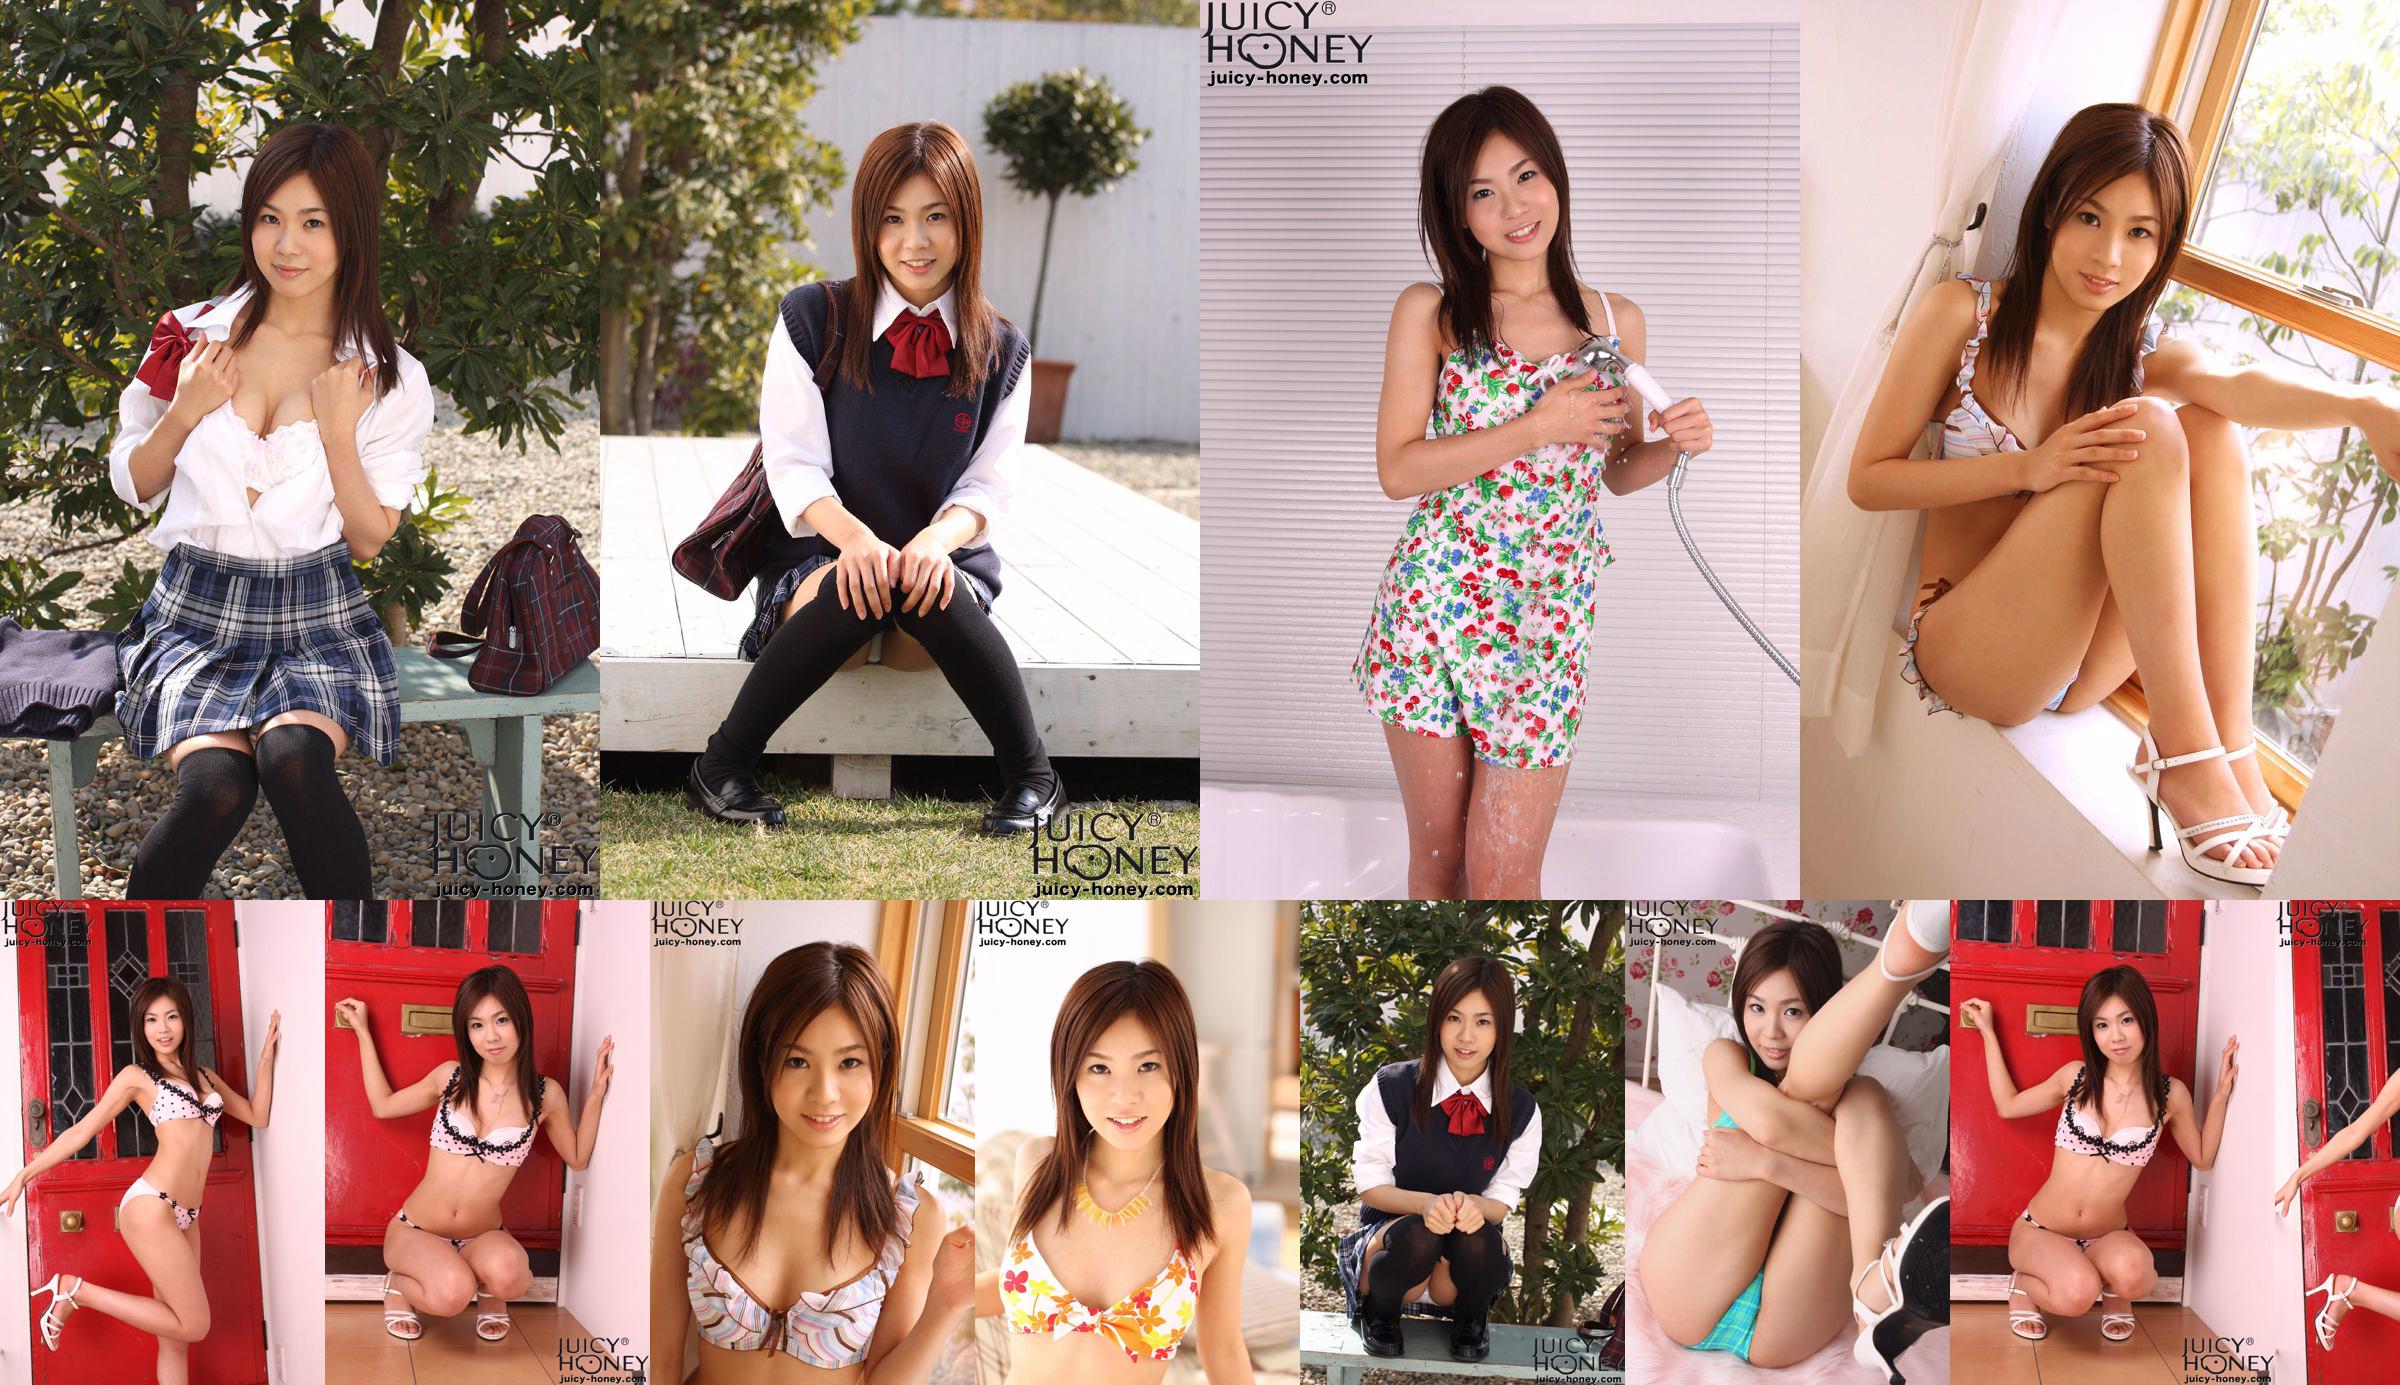 [Juicy Honey] jh062 Miri Yaguchi "Rookie Edition 2009" No.81c5ae Page 6